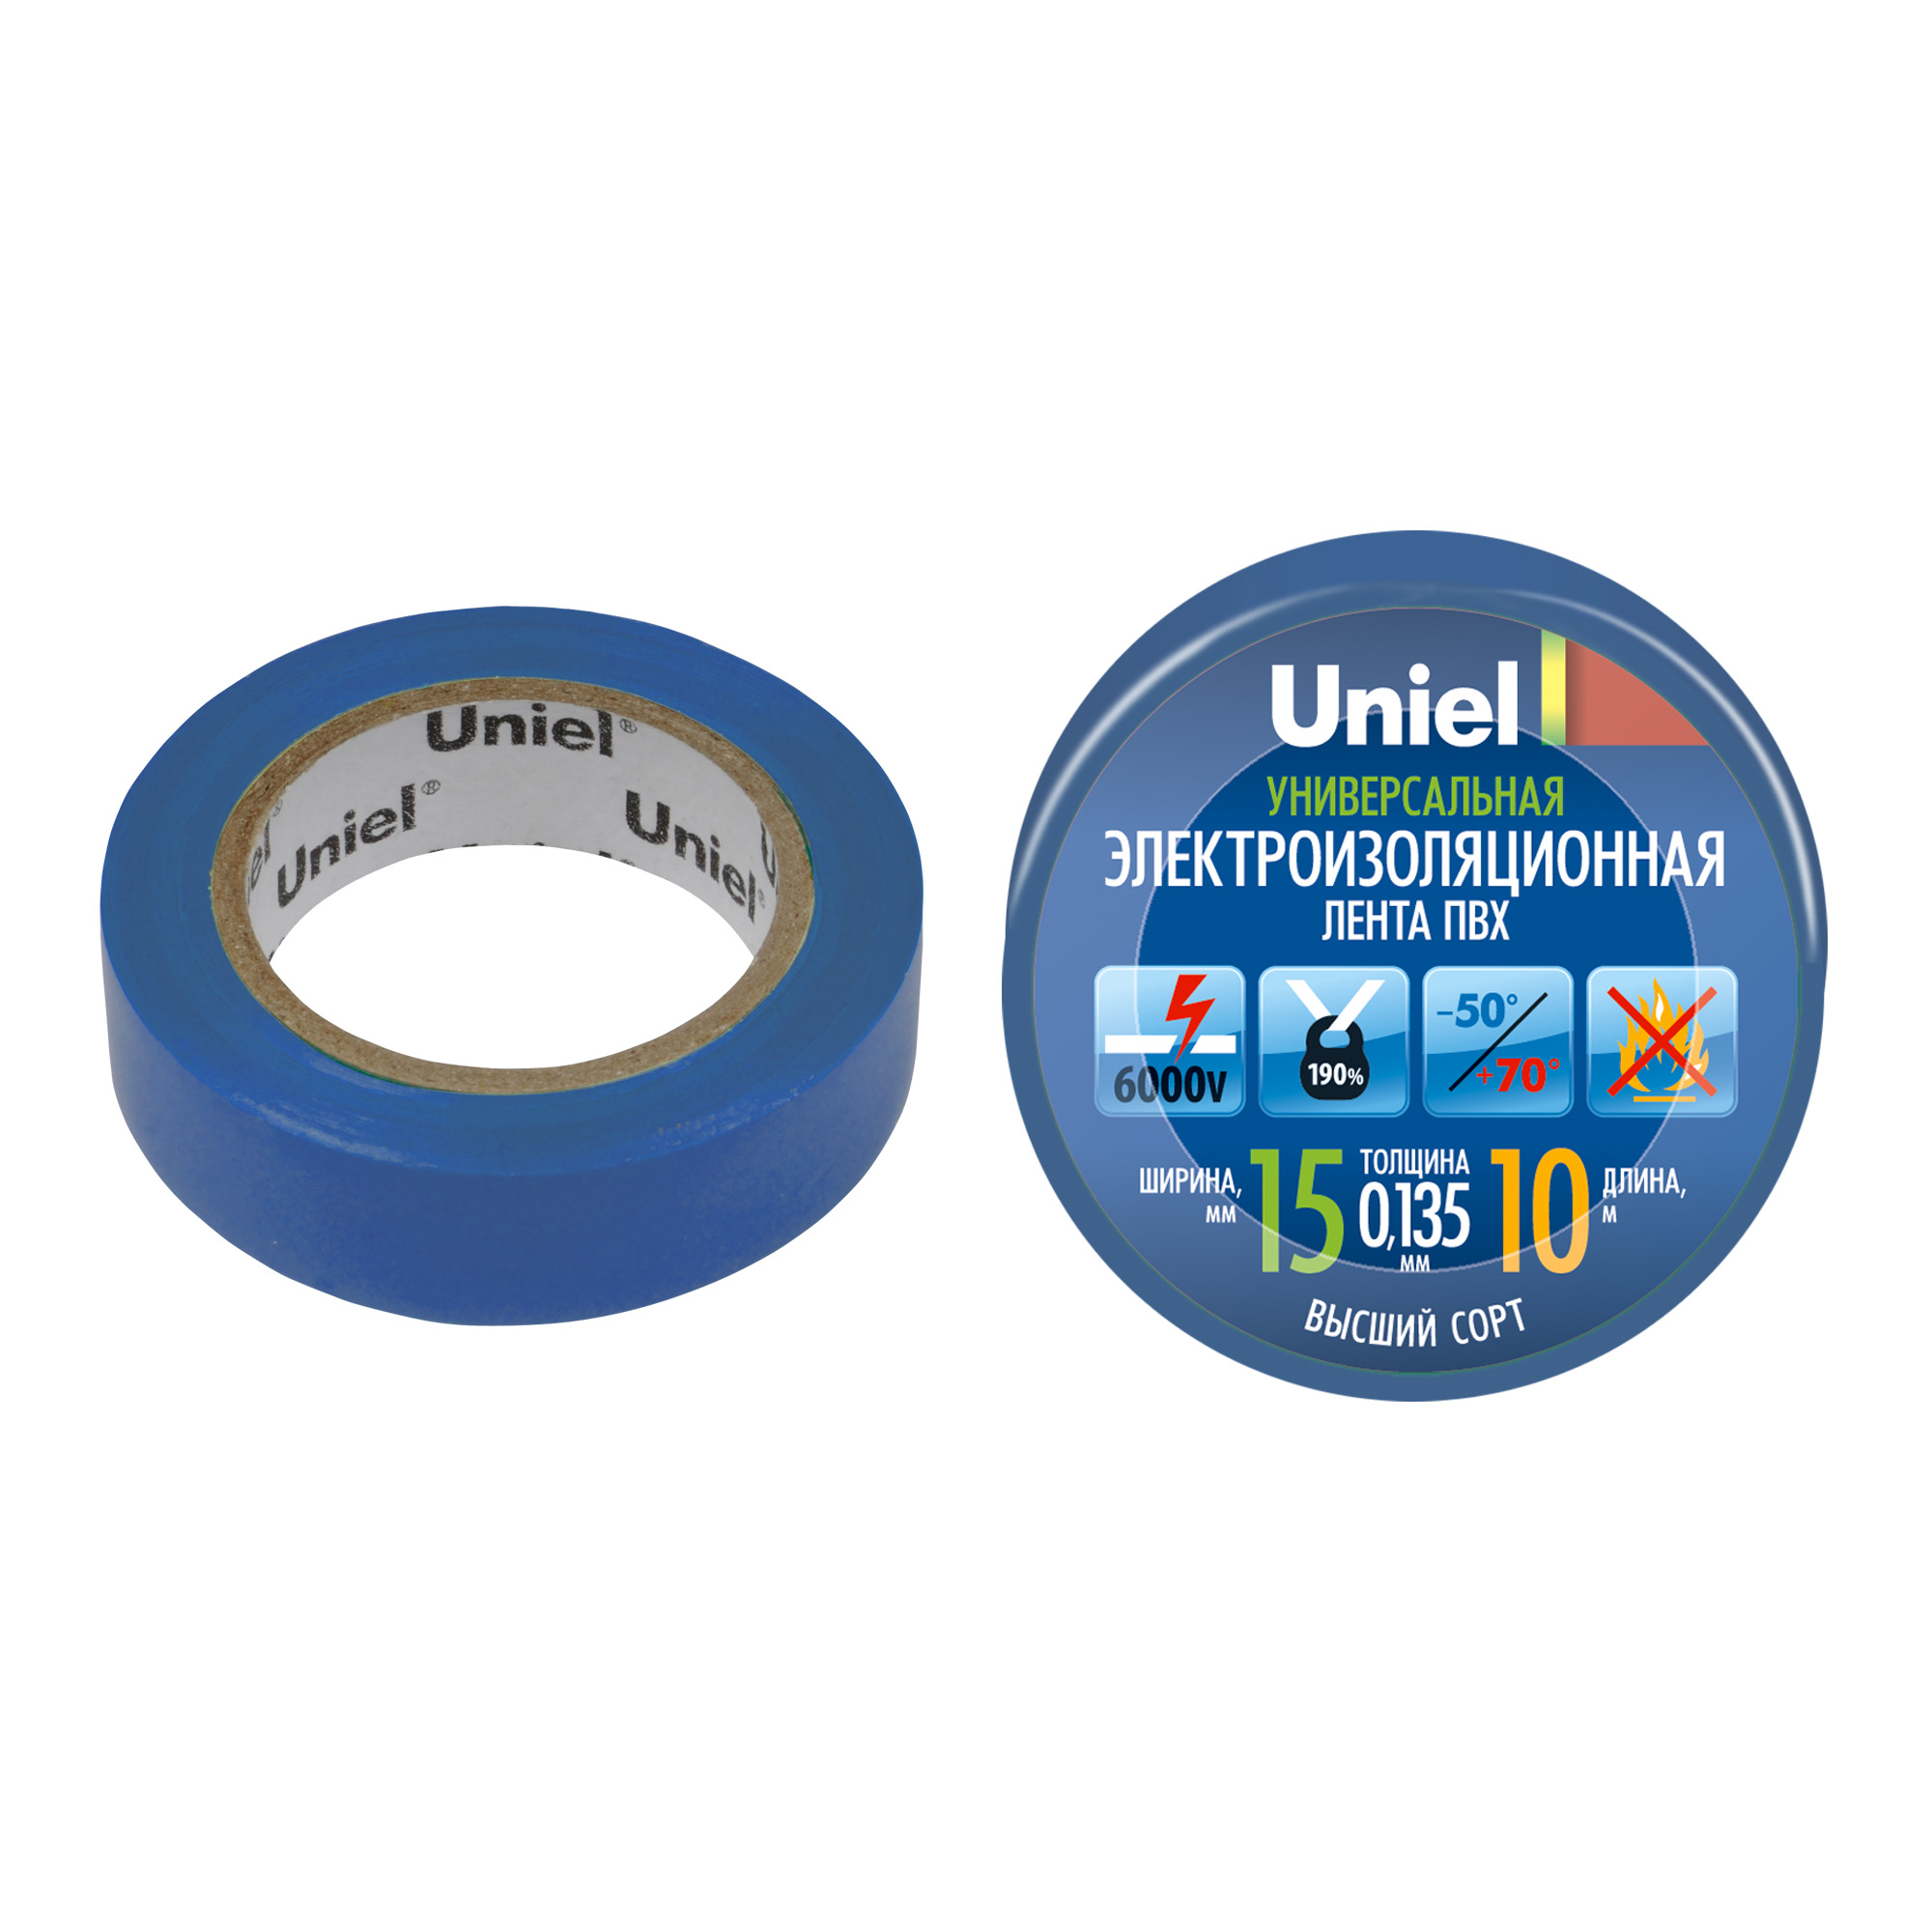 UIT-135P 10-15-01 BLU Изоляционная лента Uniel 10м. 15мм. 0.135мм. 1шт. цвет Синий